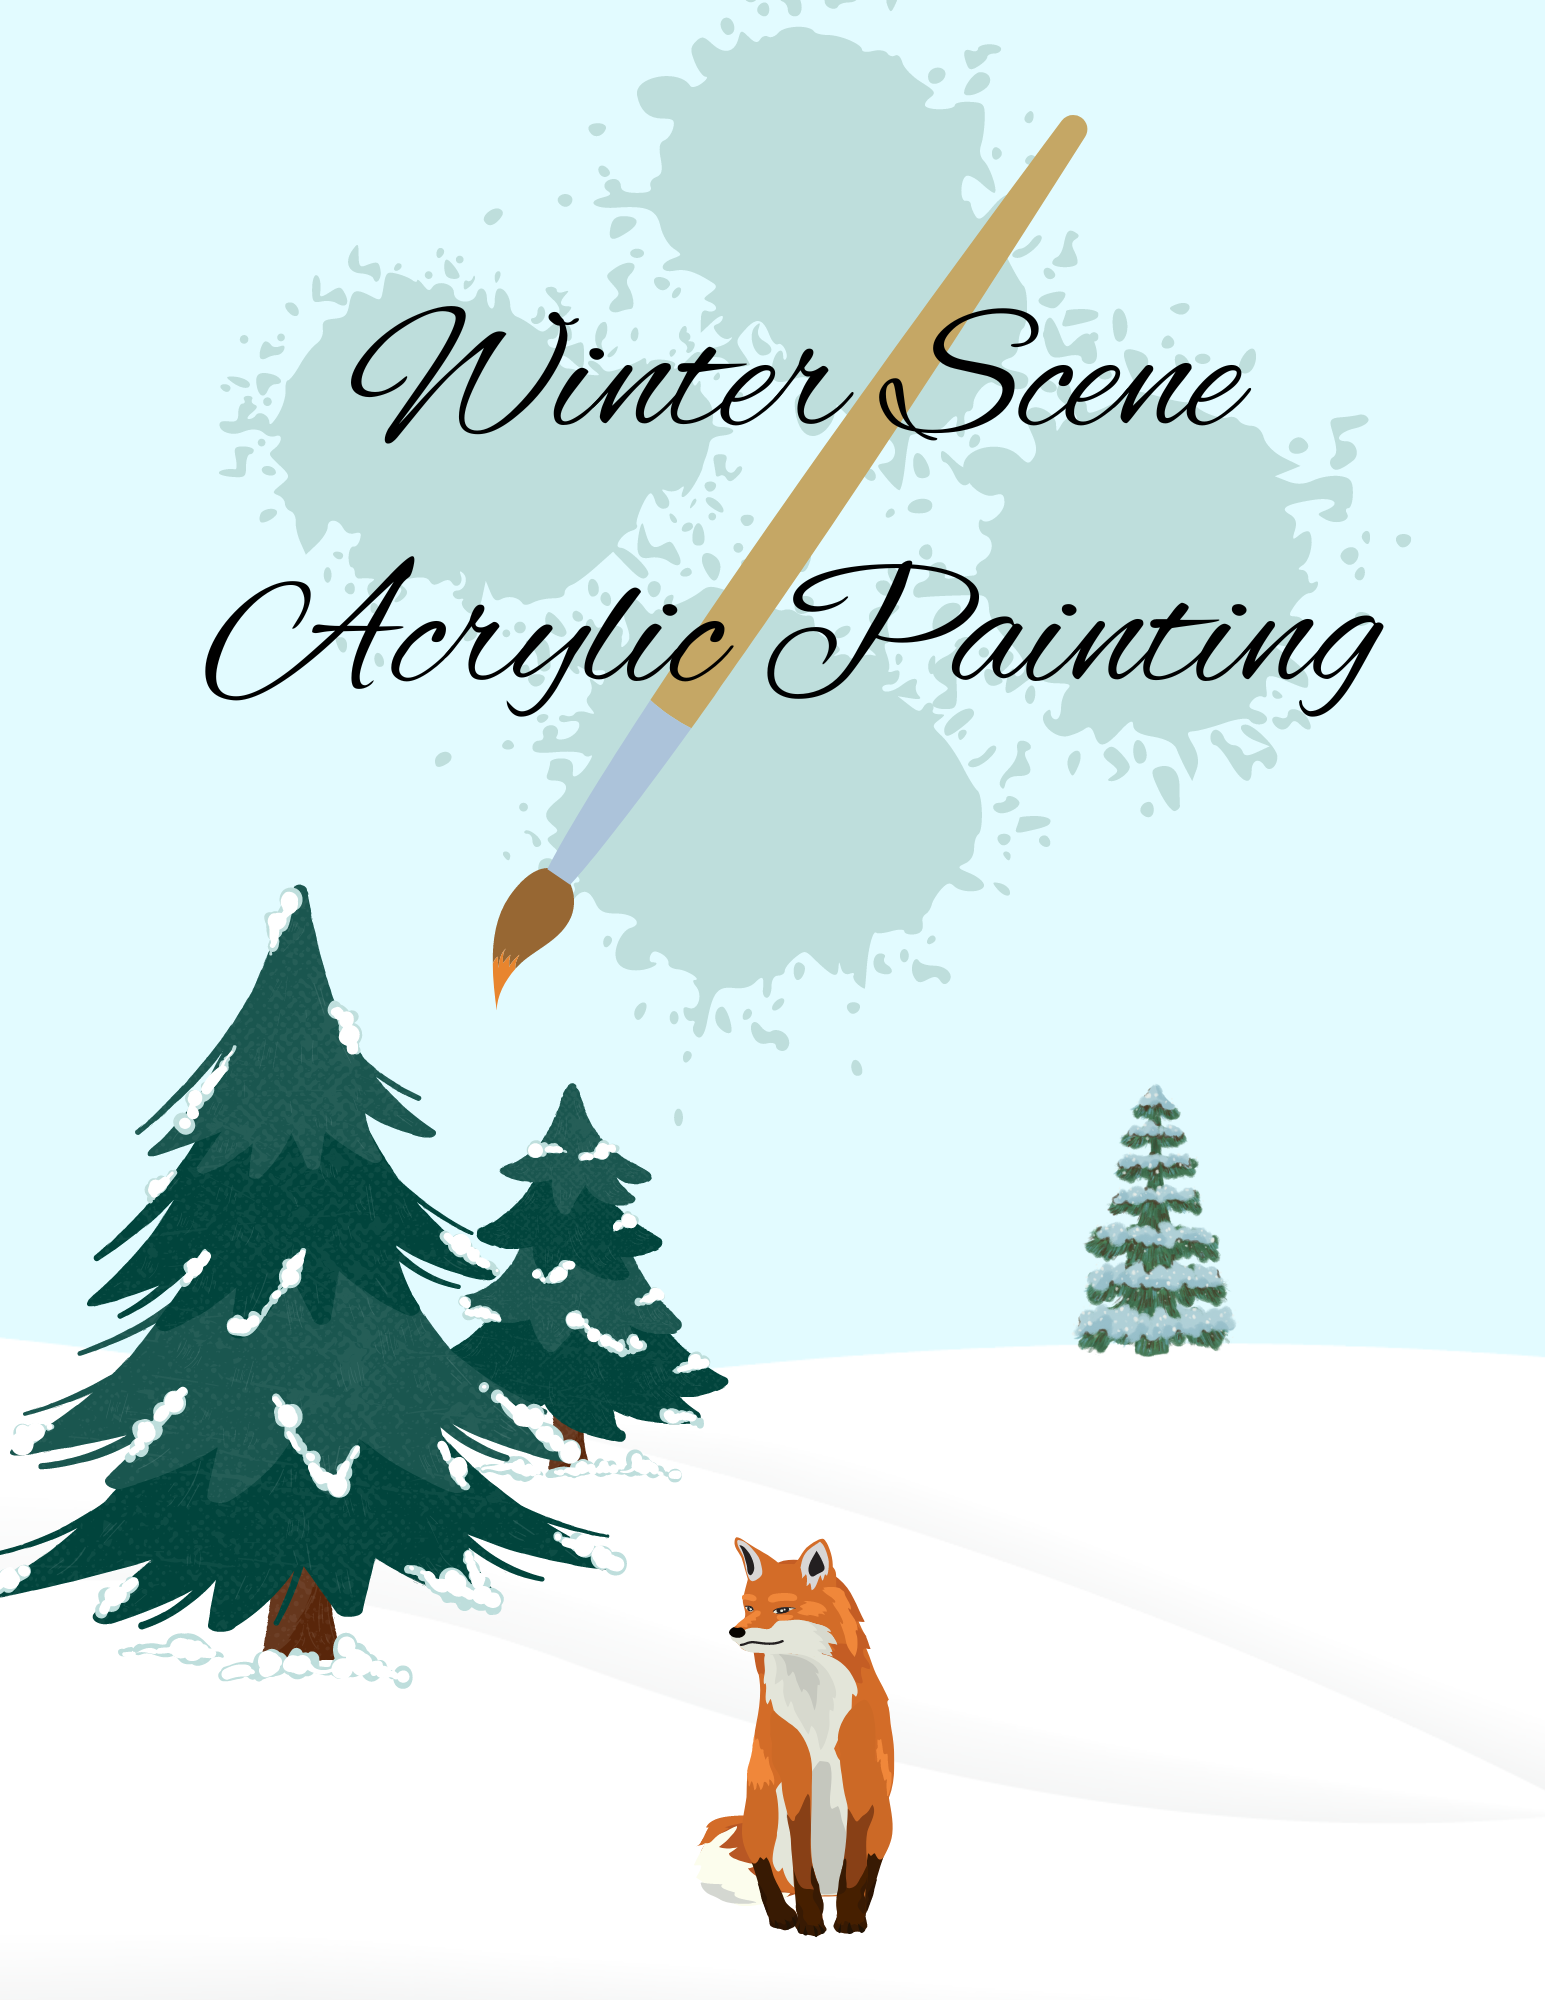 Winter Scene Acrylic Painting Flyer